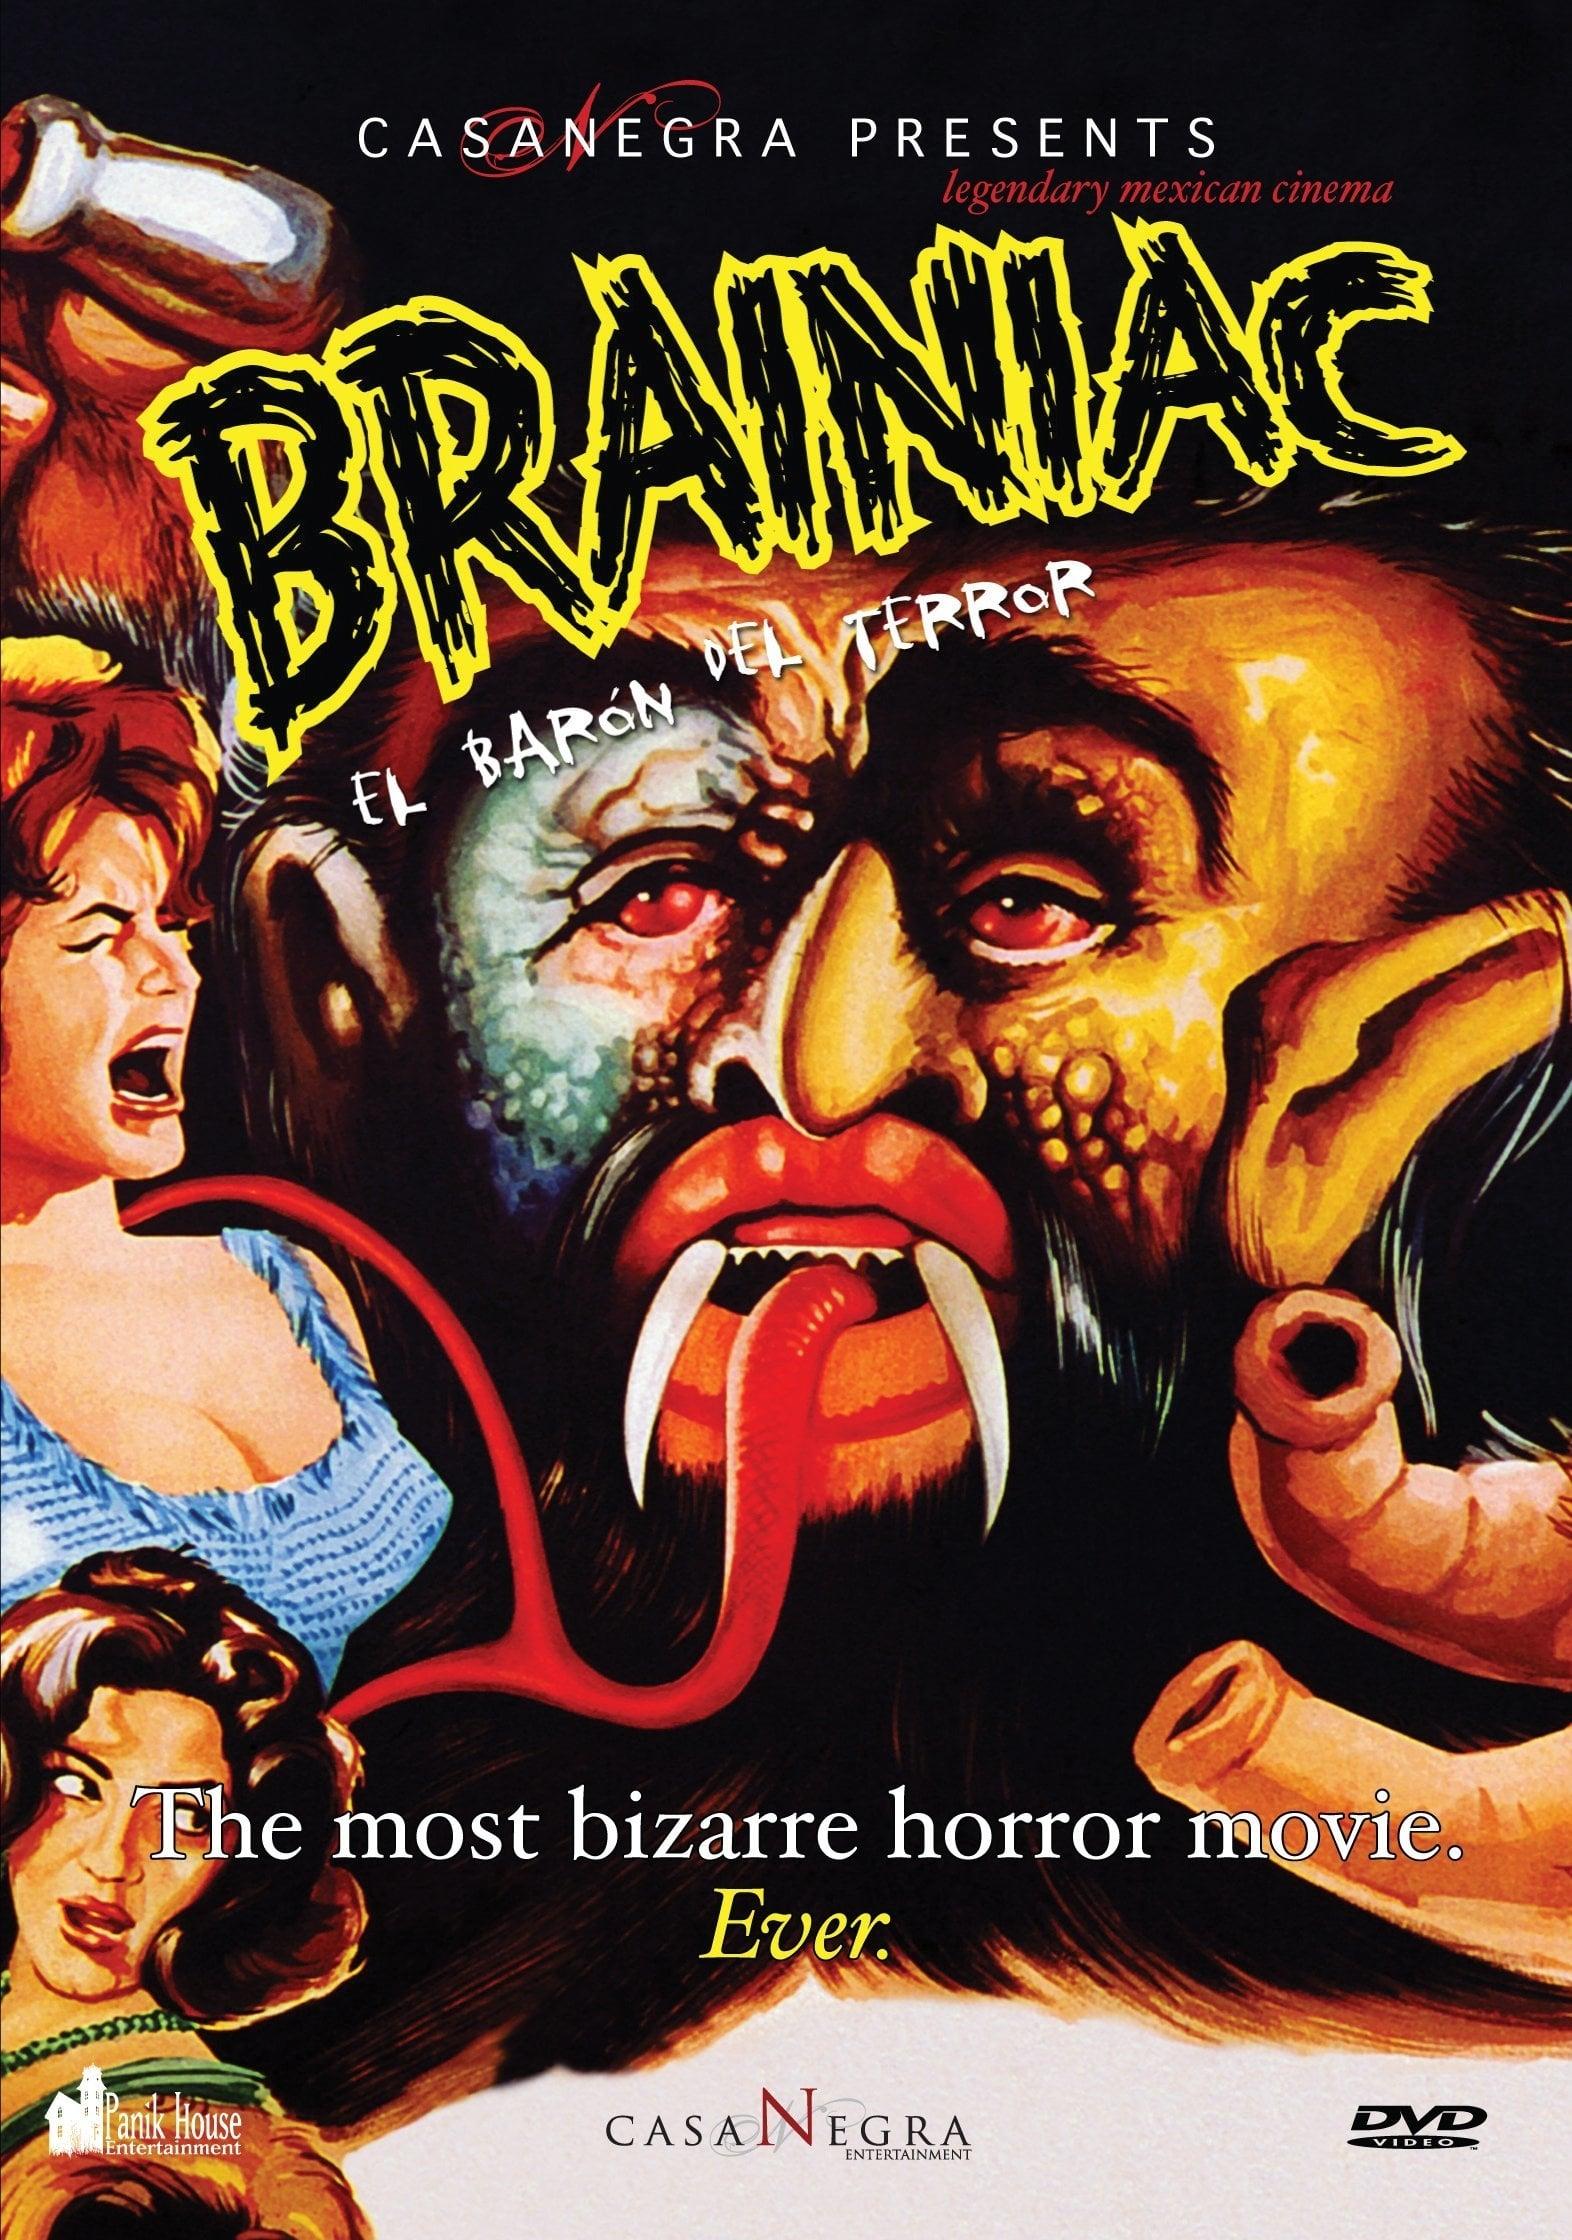 The Brainiac poster